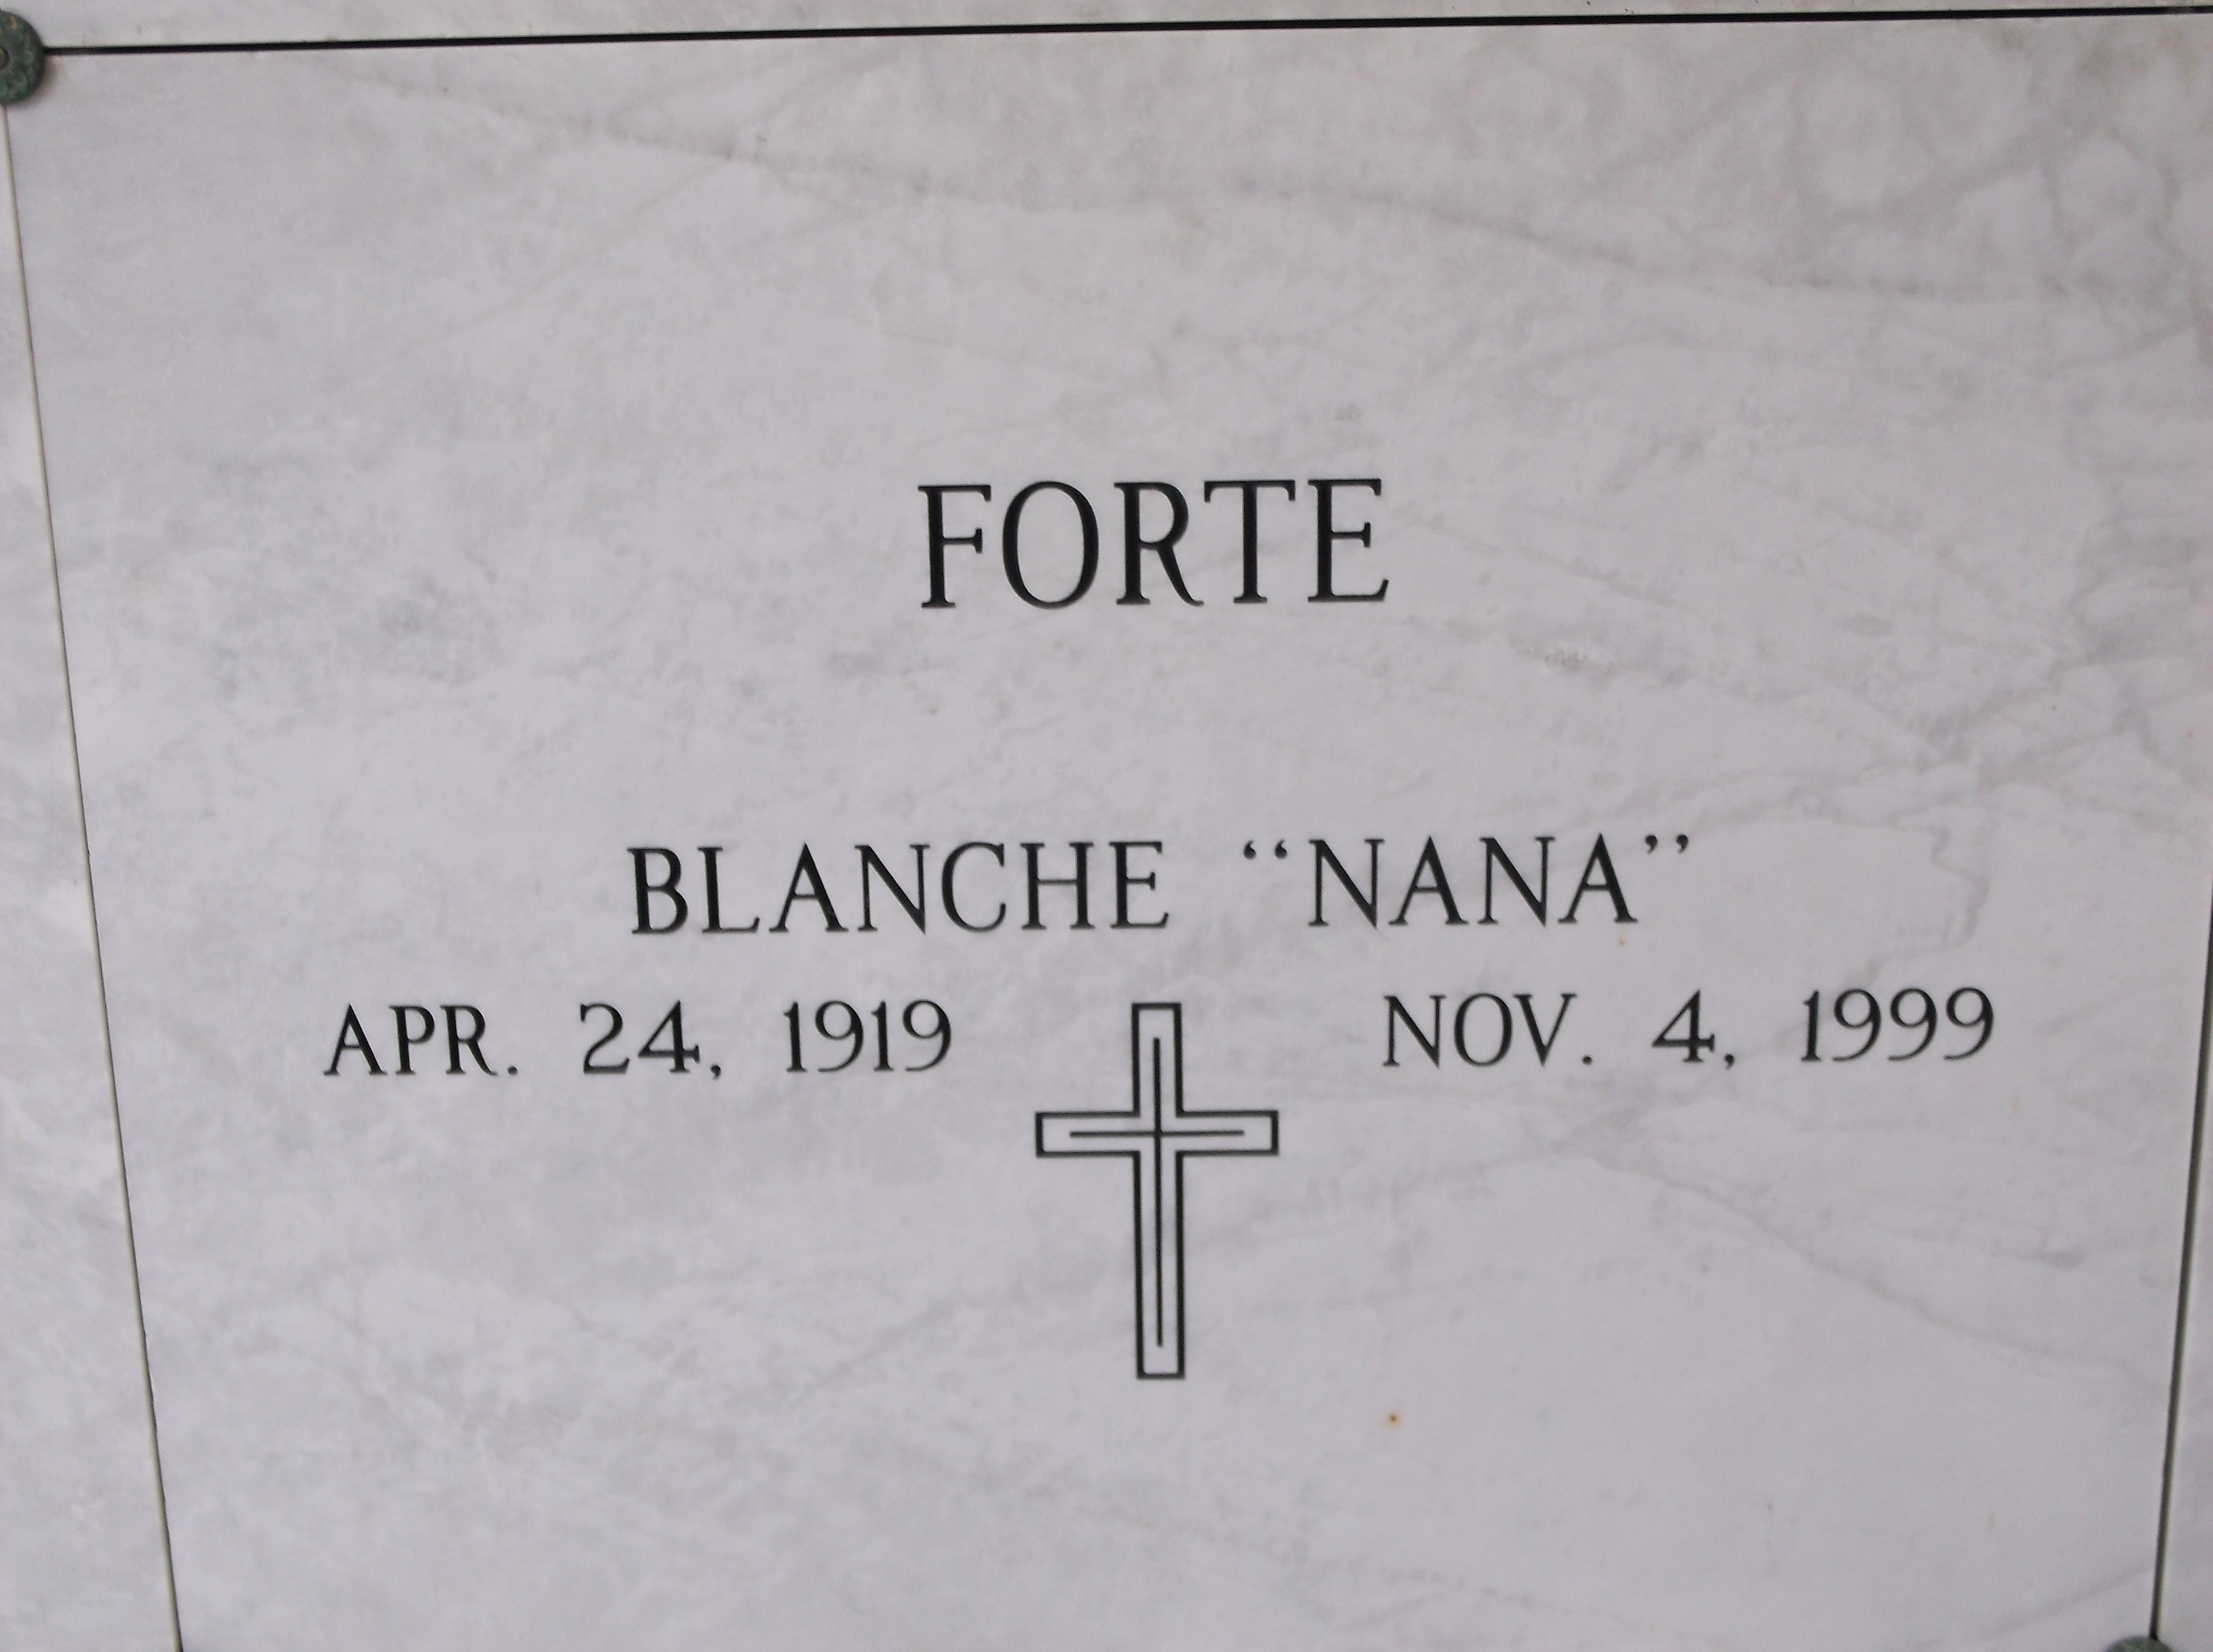 Blanche "Nana" Forte